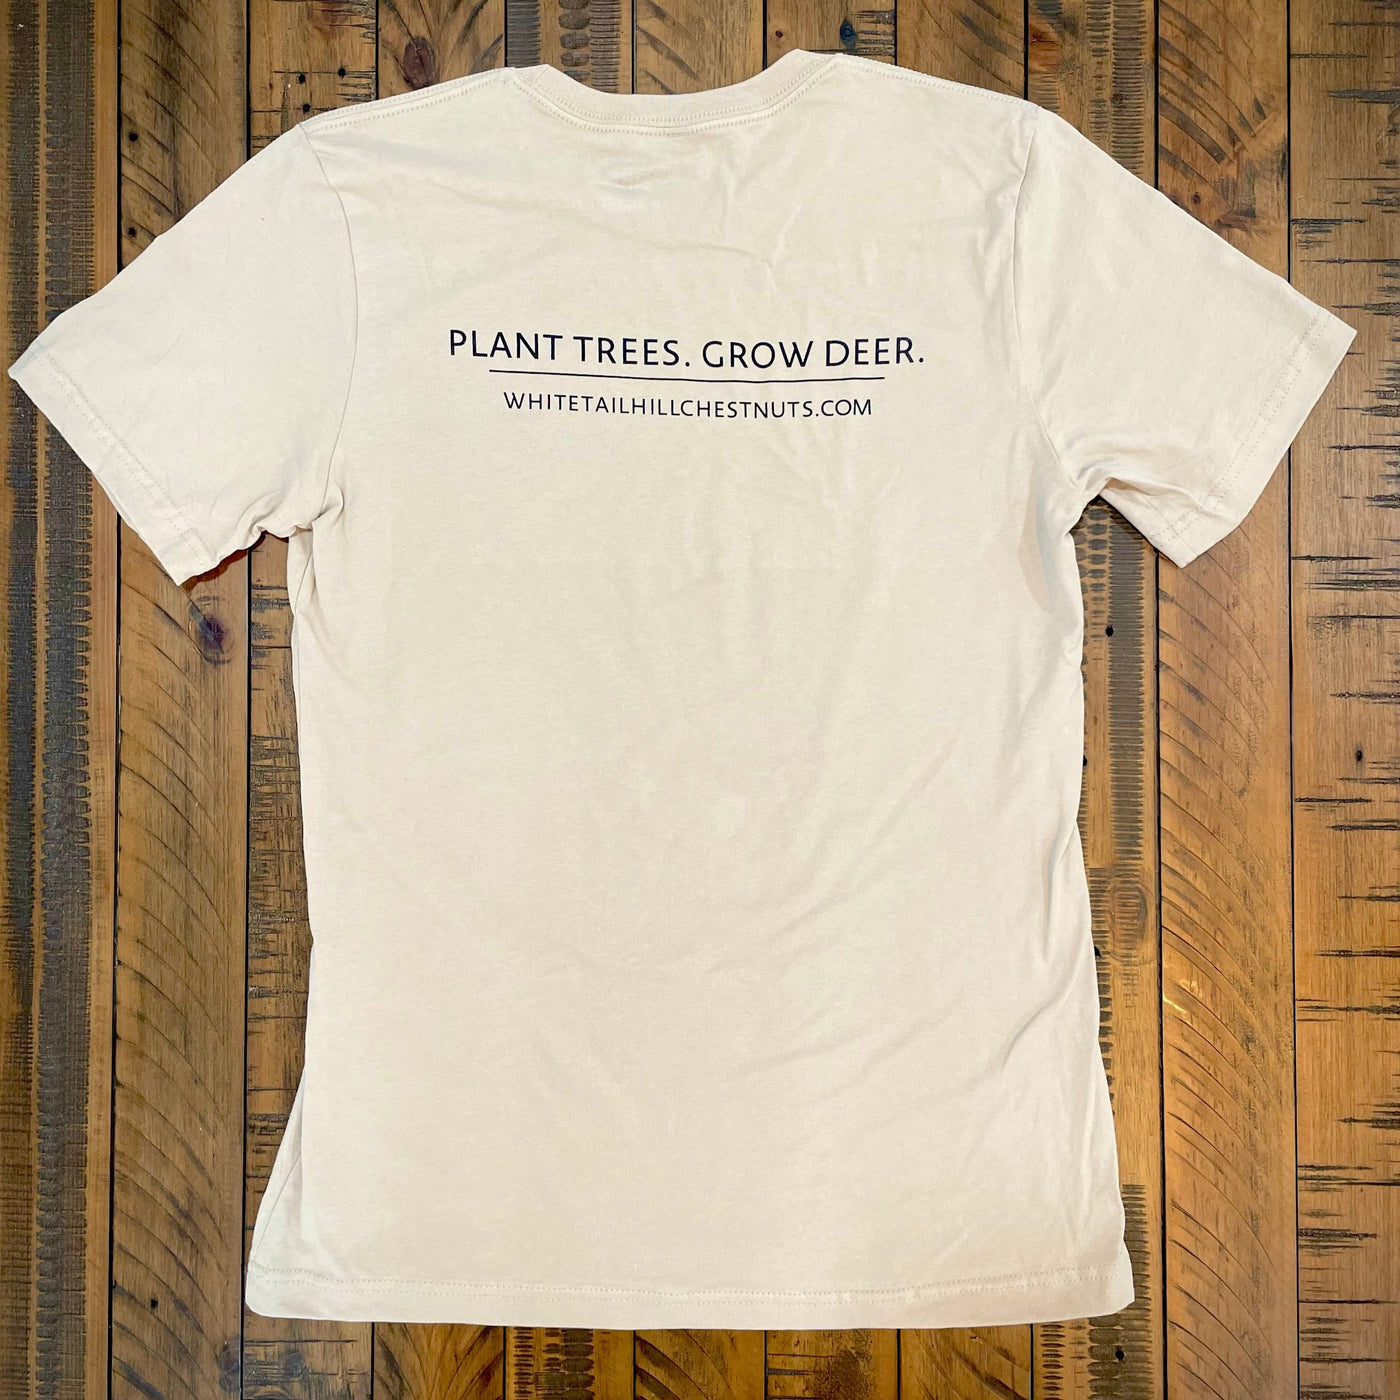 T-Shirt - "Plant Trees. Grow Deer."